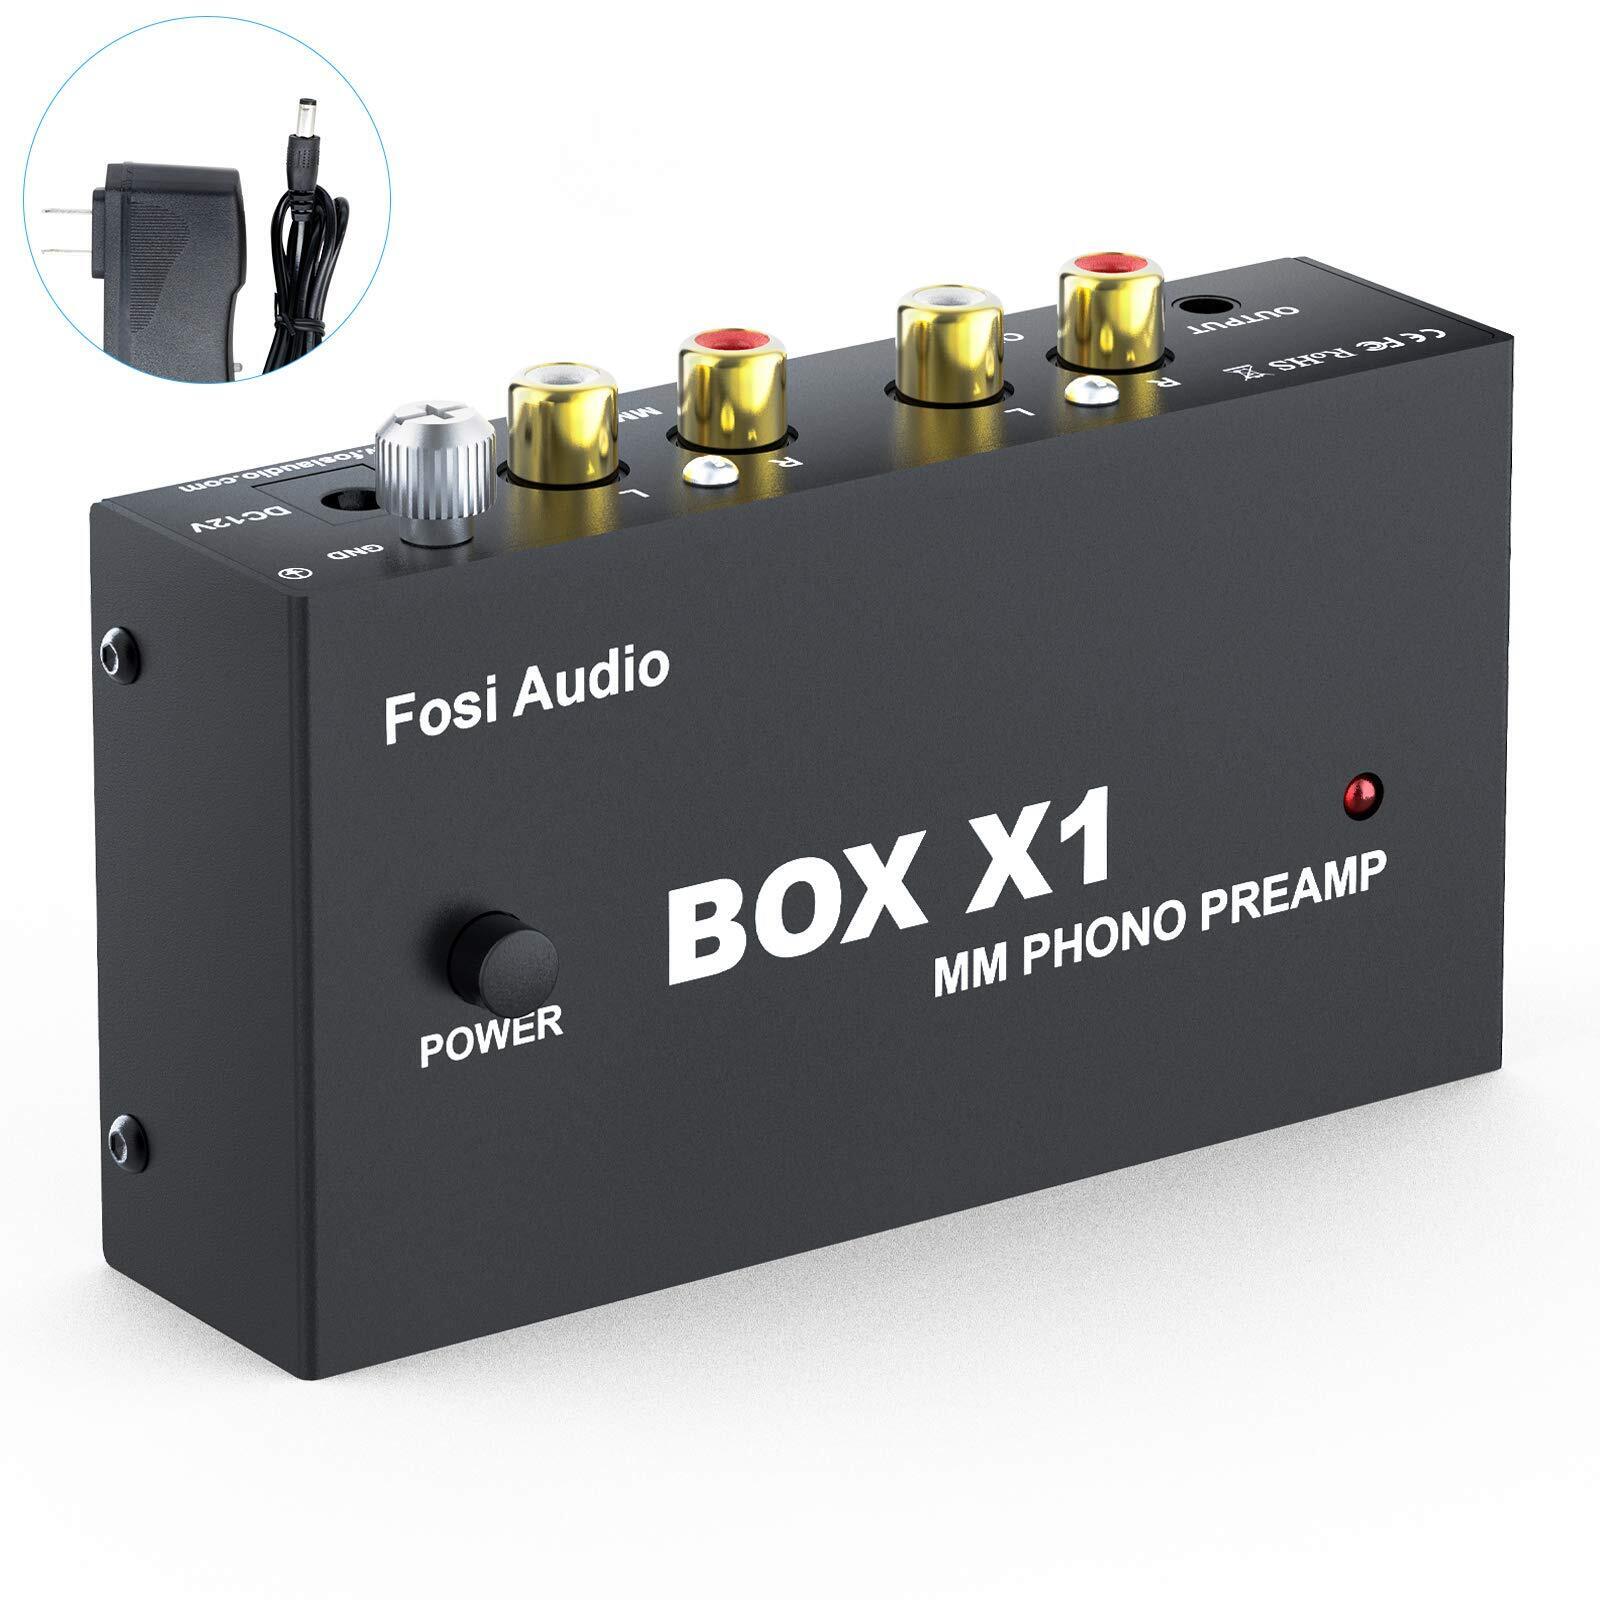 Fosi Audio Box X1 Phono Preamp Mm Portable Headphone Amplifier Super Compact